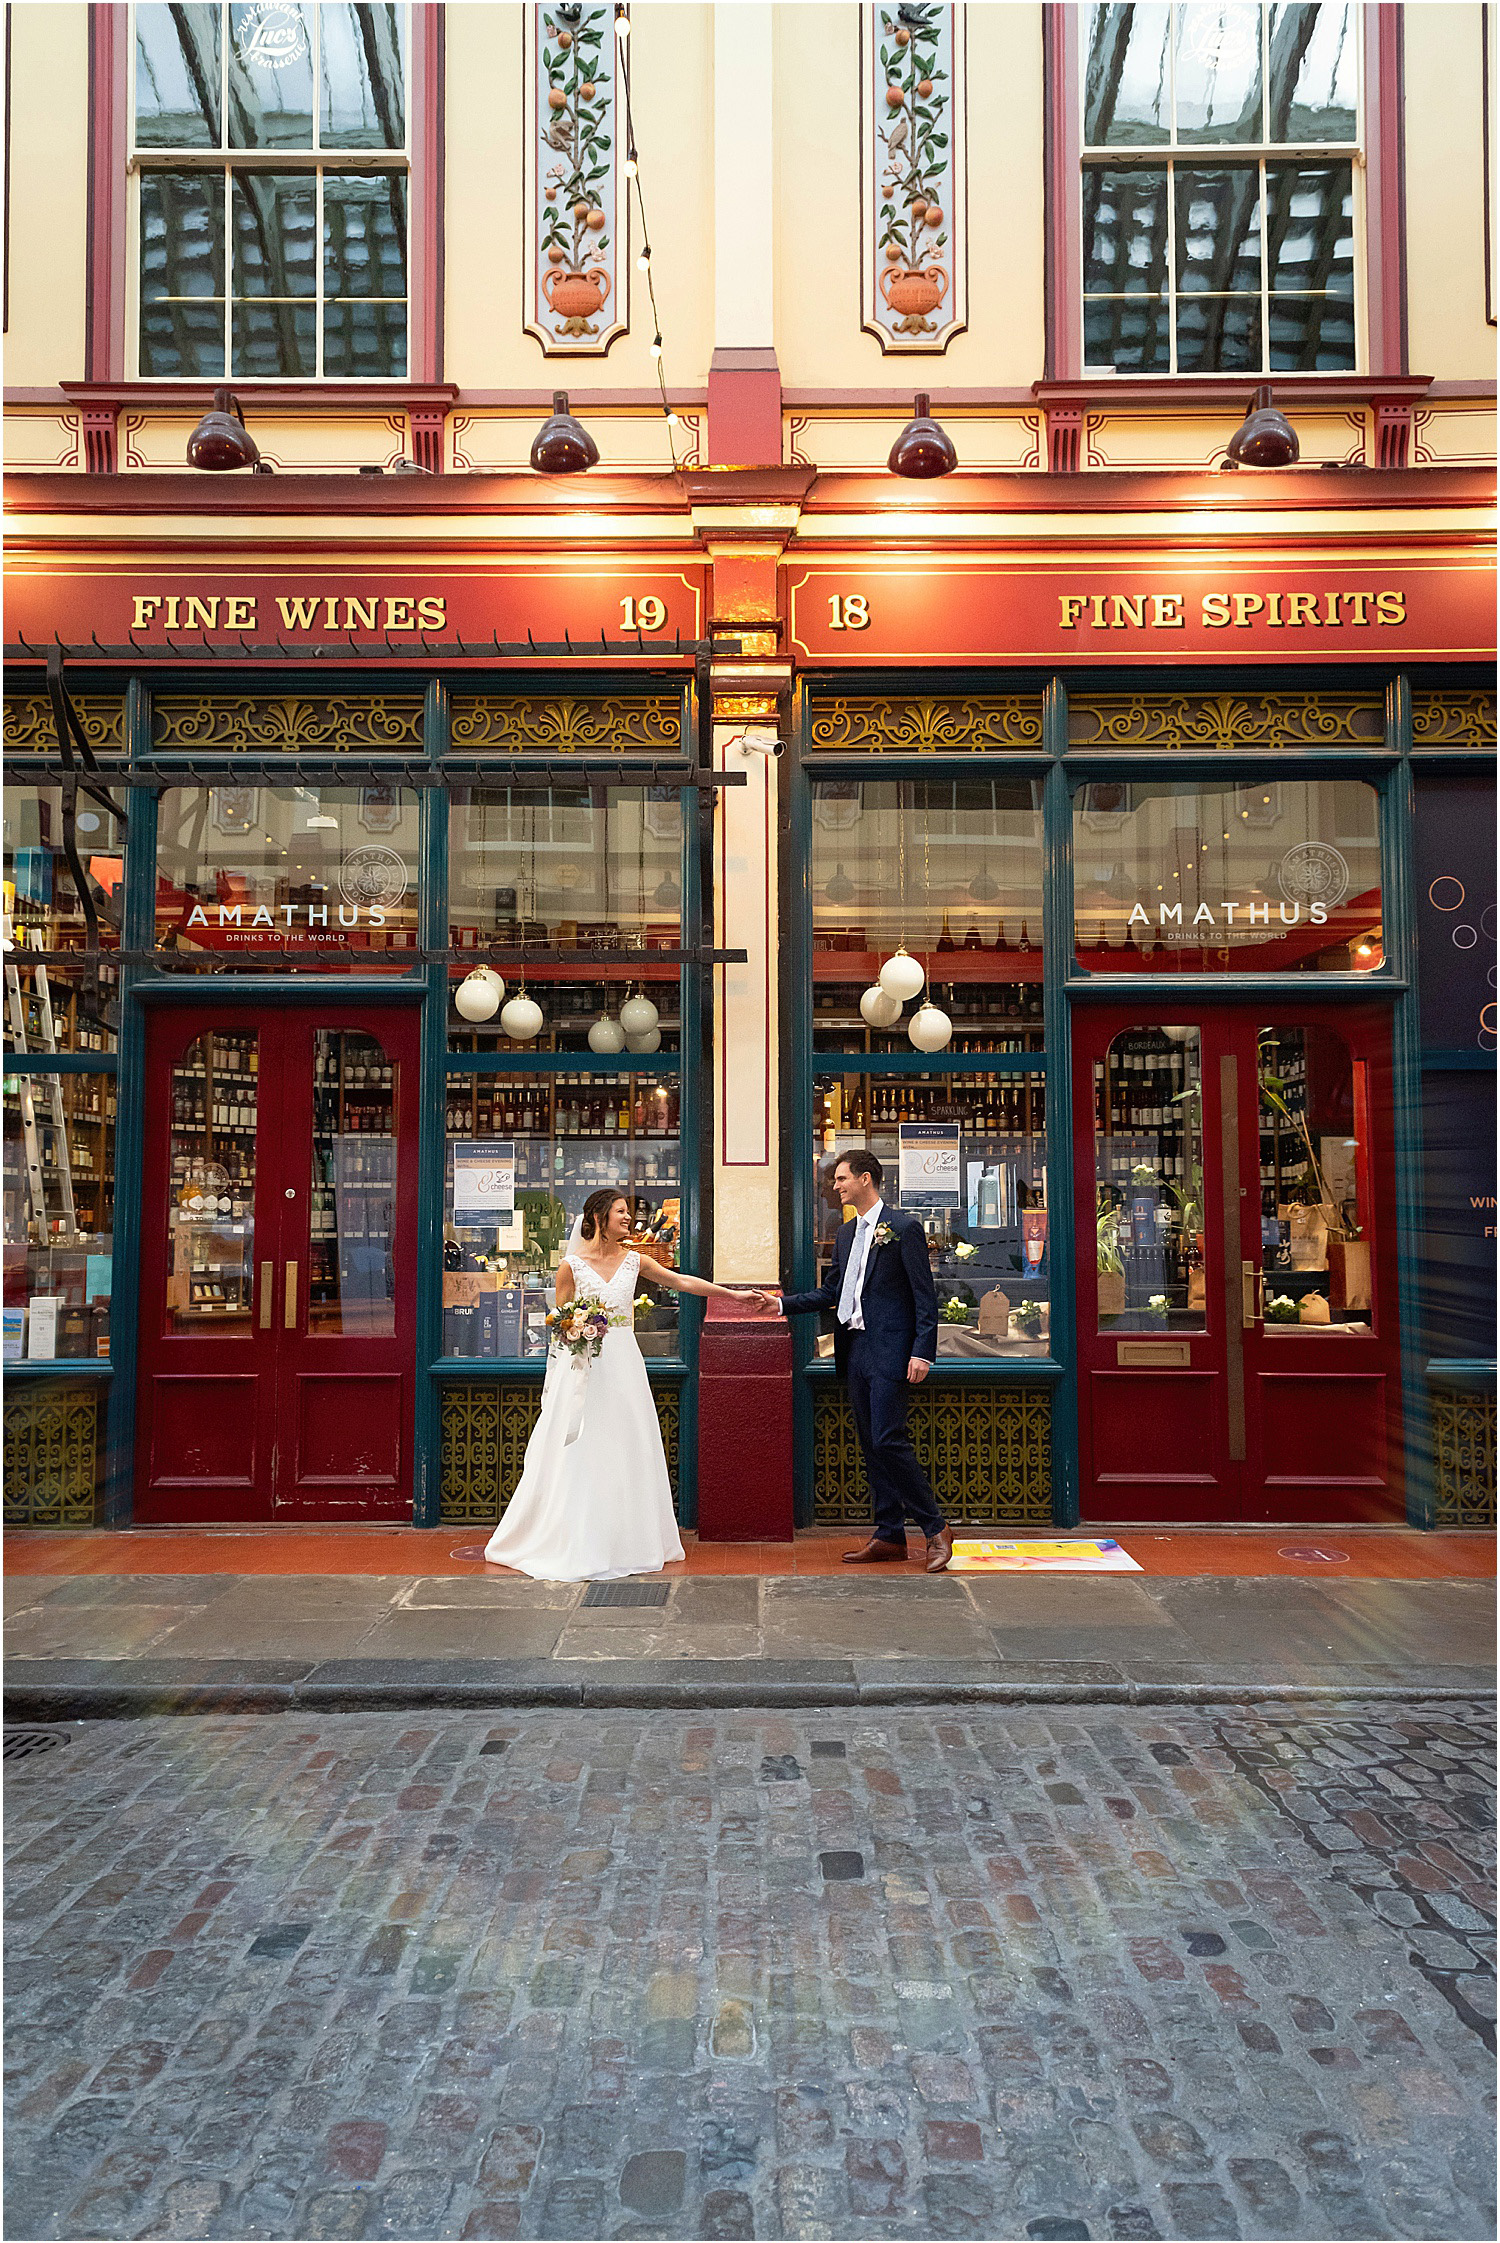 Rich-Jen-dusky-blue-pink-pastel-wedding-london-st-helens-bishopsgate-lily-sawyer-photo